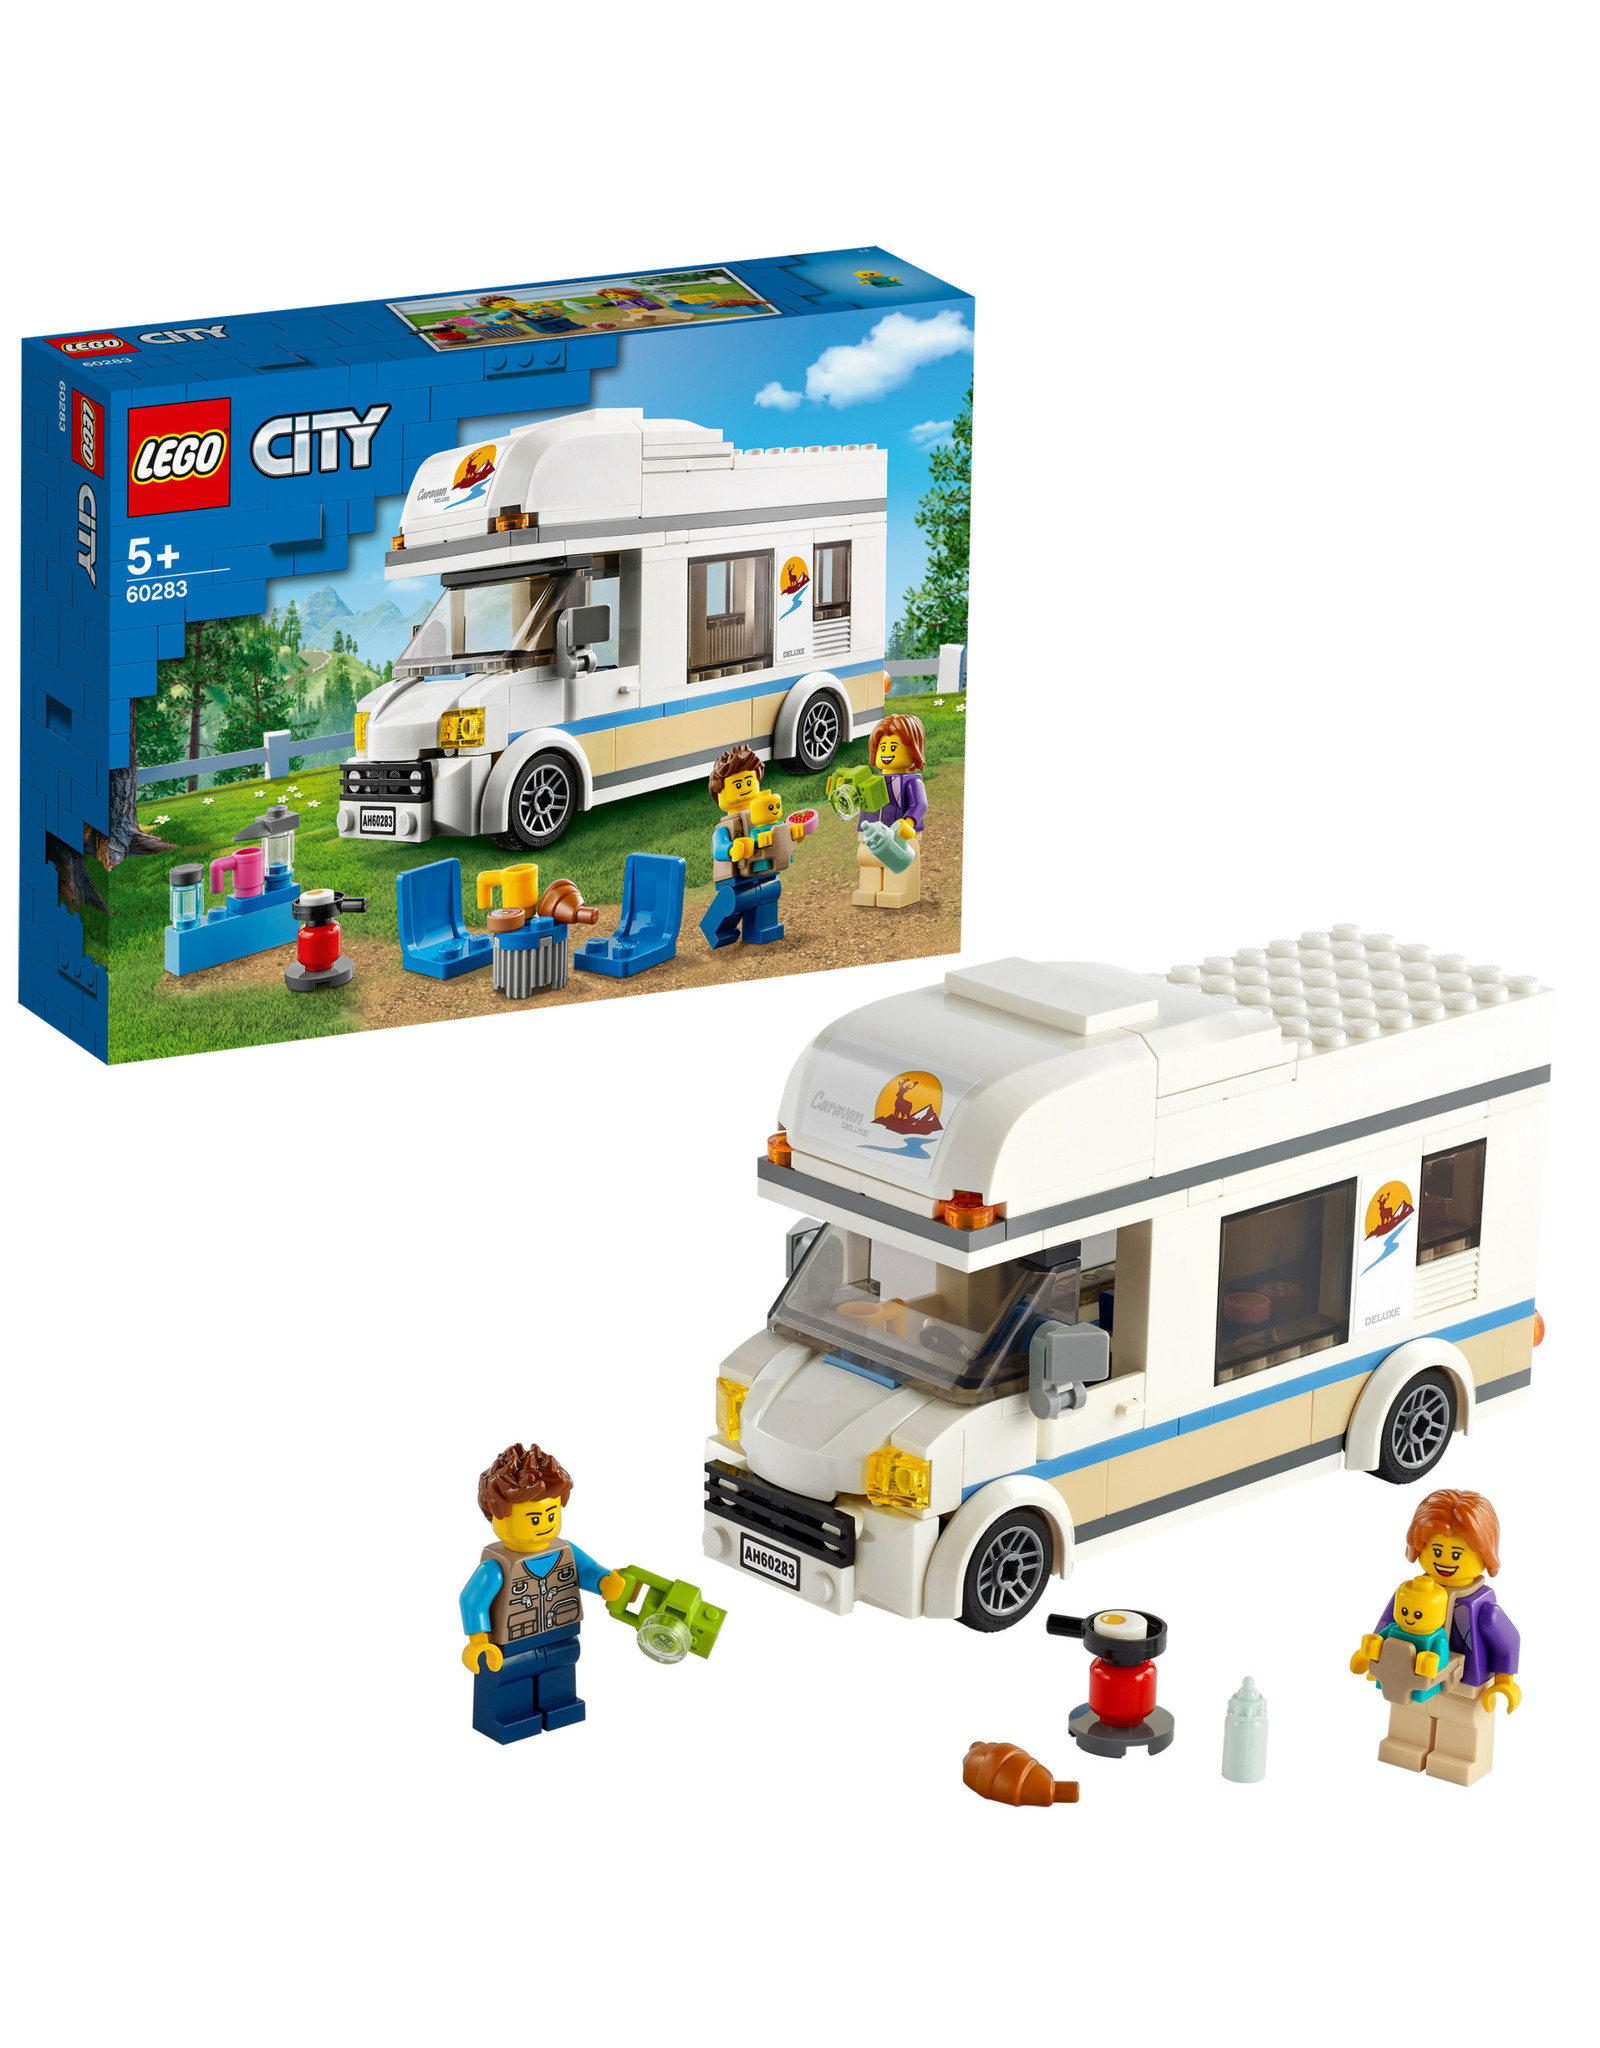 LEGO Lego City 60283 Vakantiecamper - Holiday Camper Van